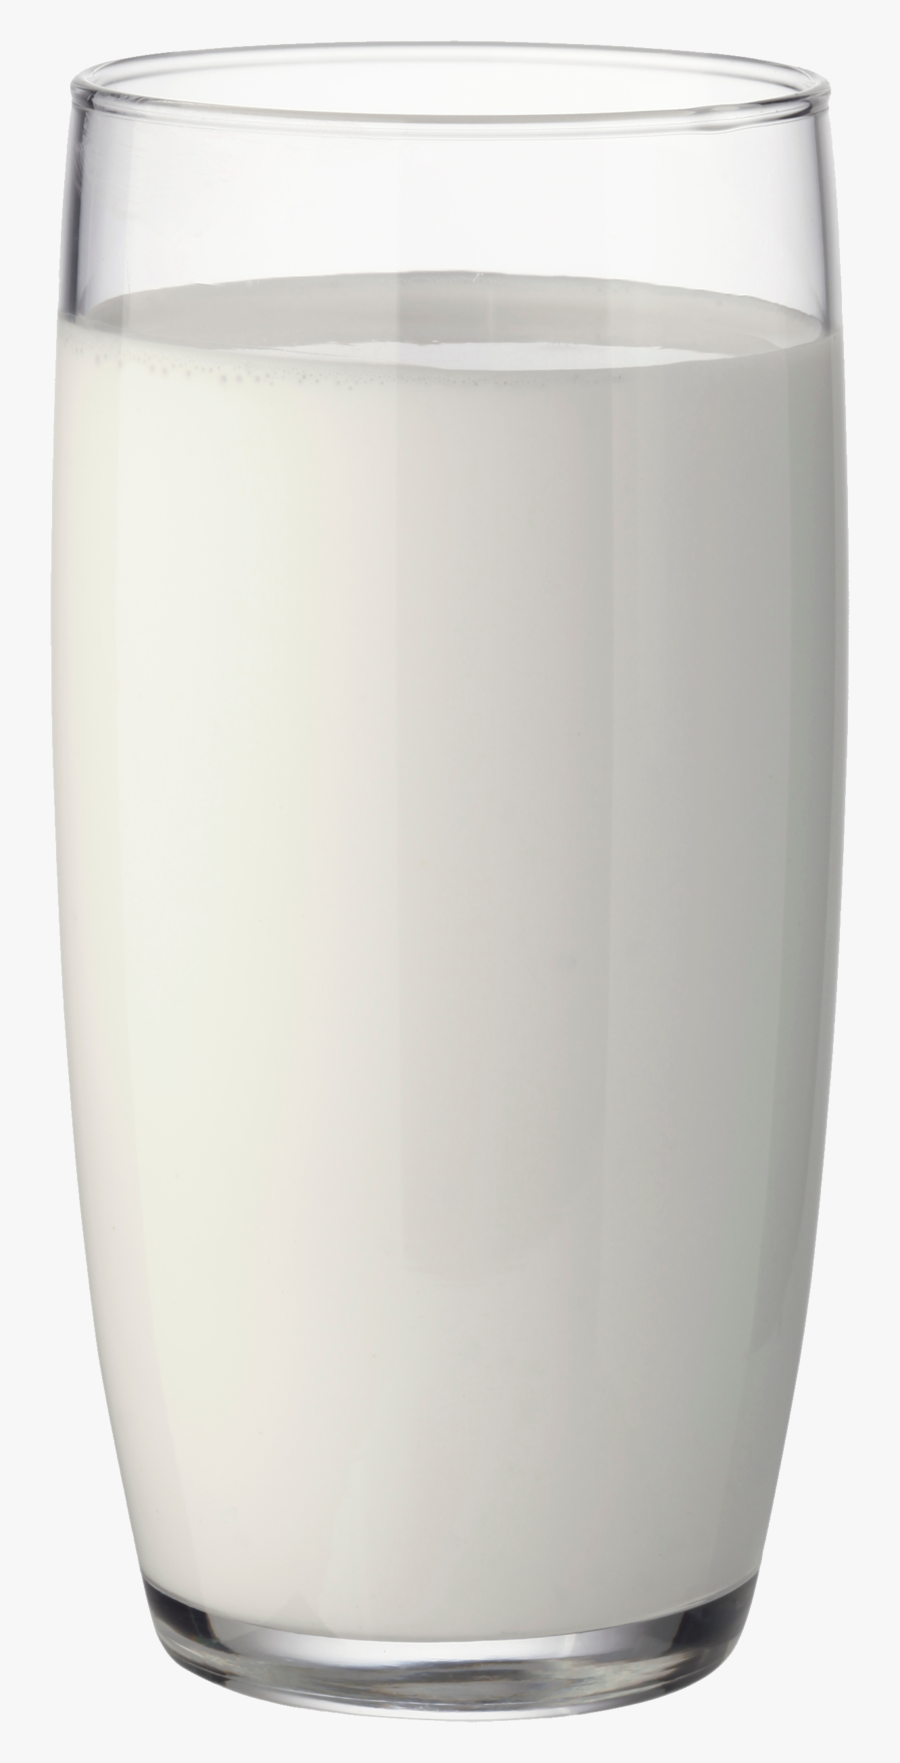 Download Free Png Image - Glass Of Milk Transparent Background, Transparent Clipart